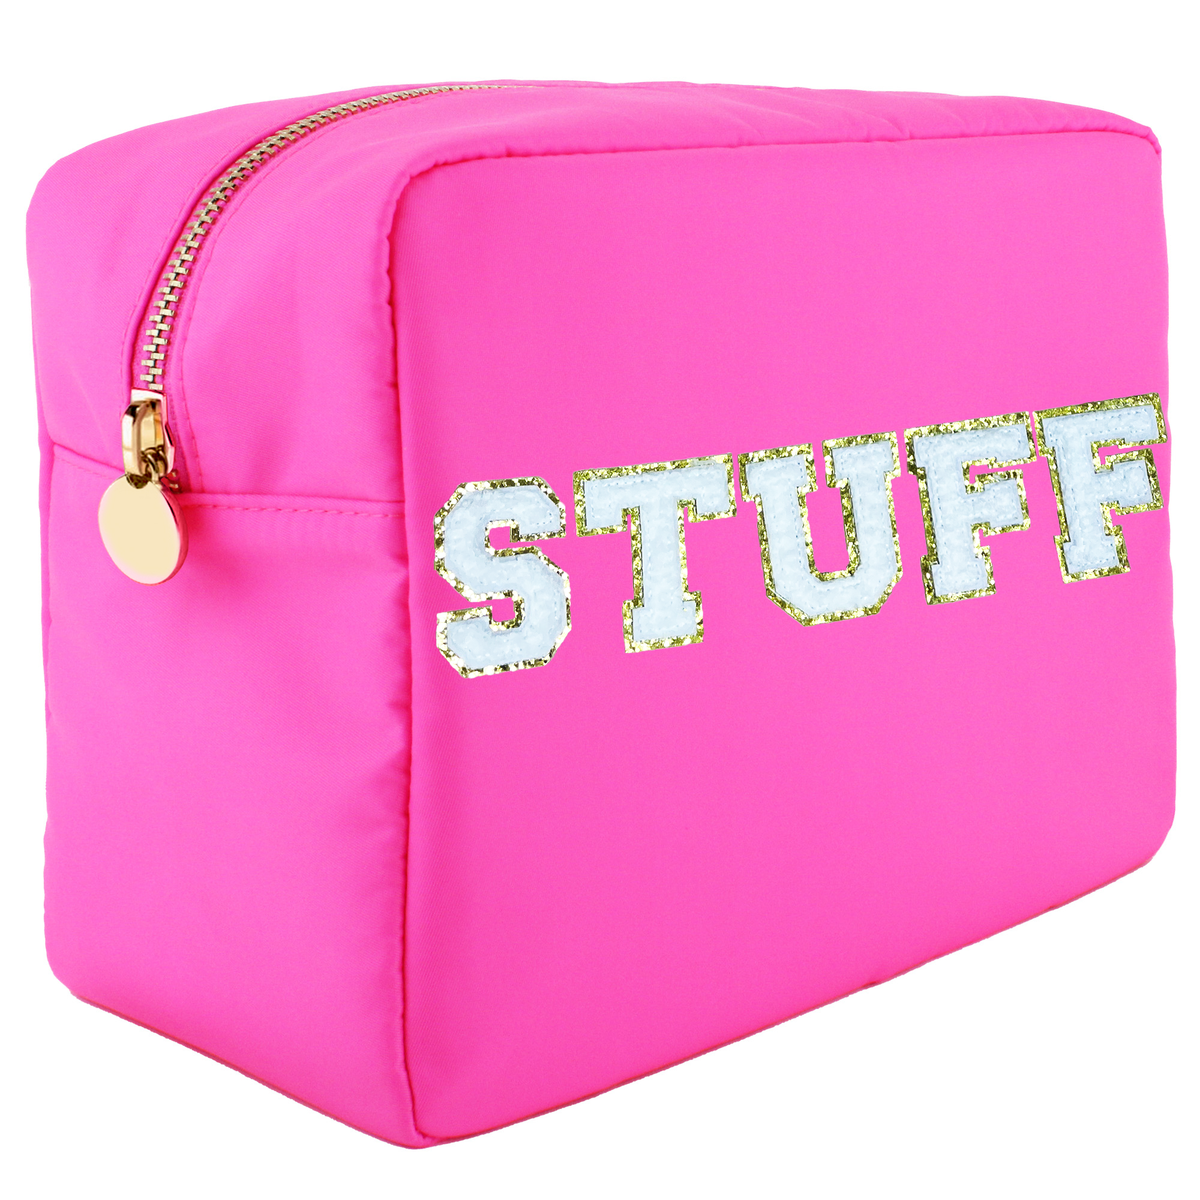 Stuff Bag Nylon Makeup Bag Large - Hot Pink Cosmetics Bag For Women